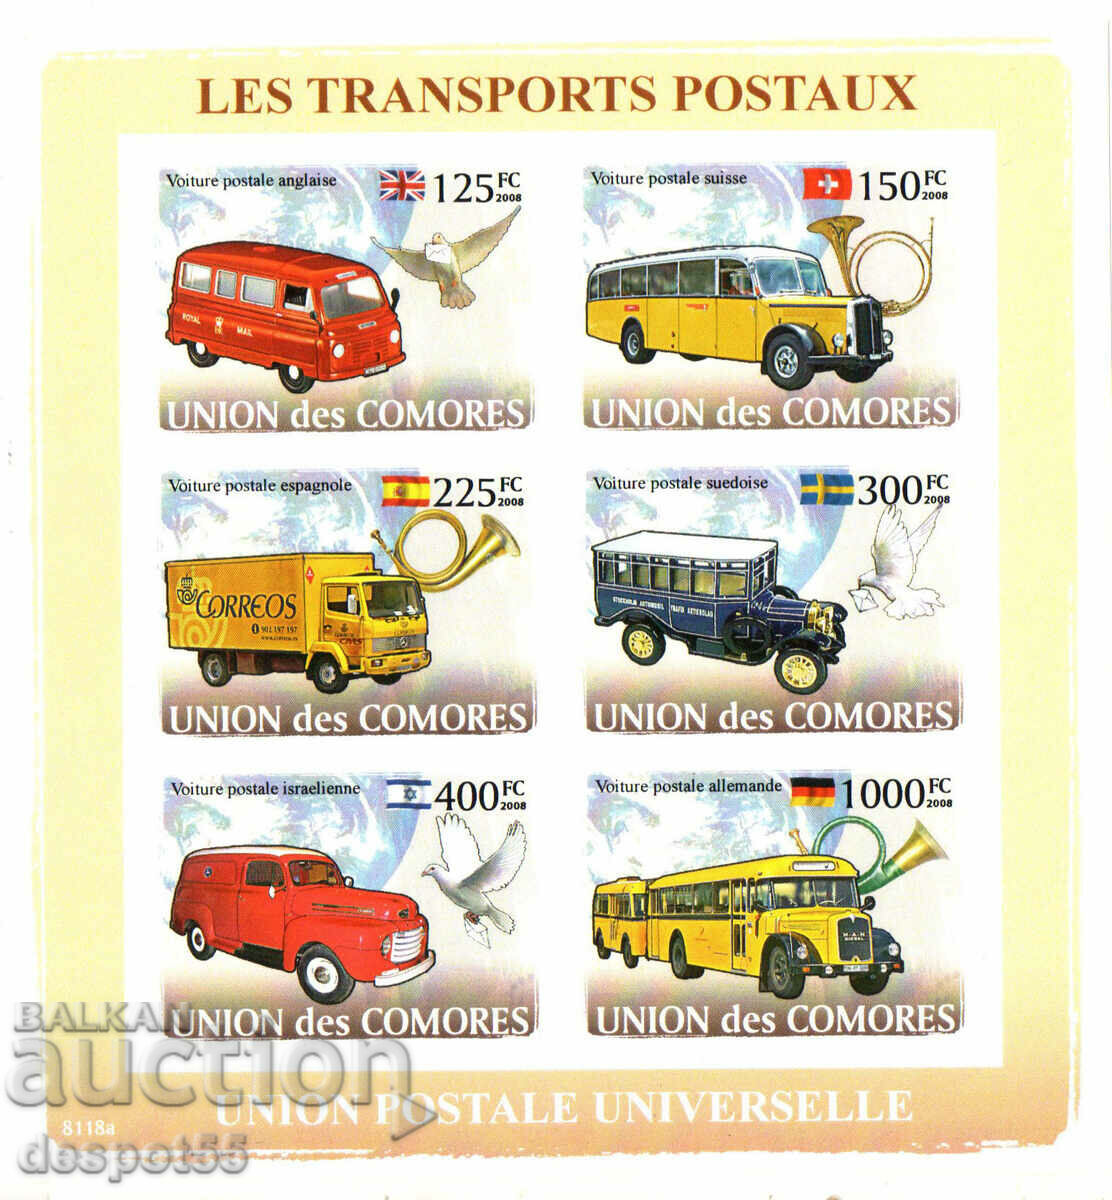 2008. Comoros Islands. Transport - Postal cars. Block.